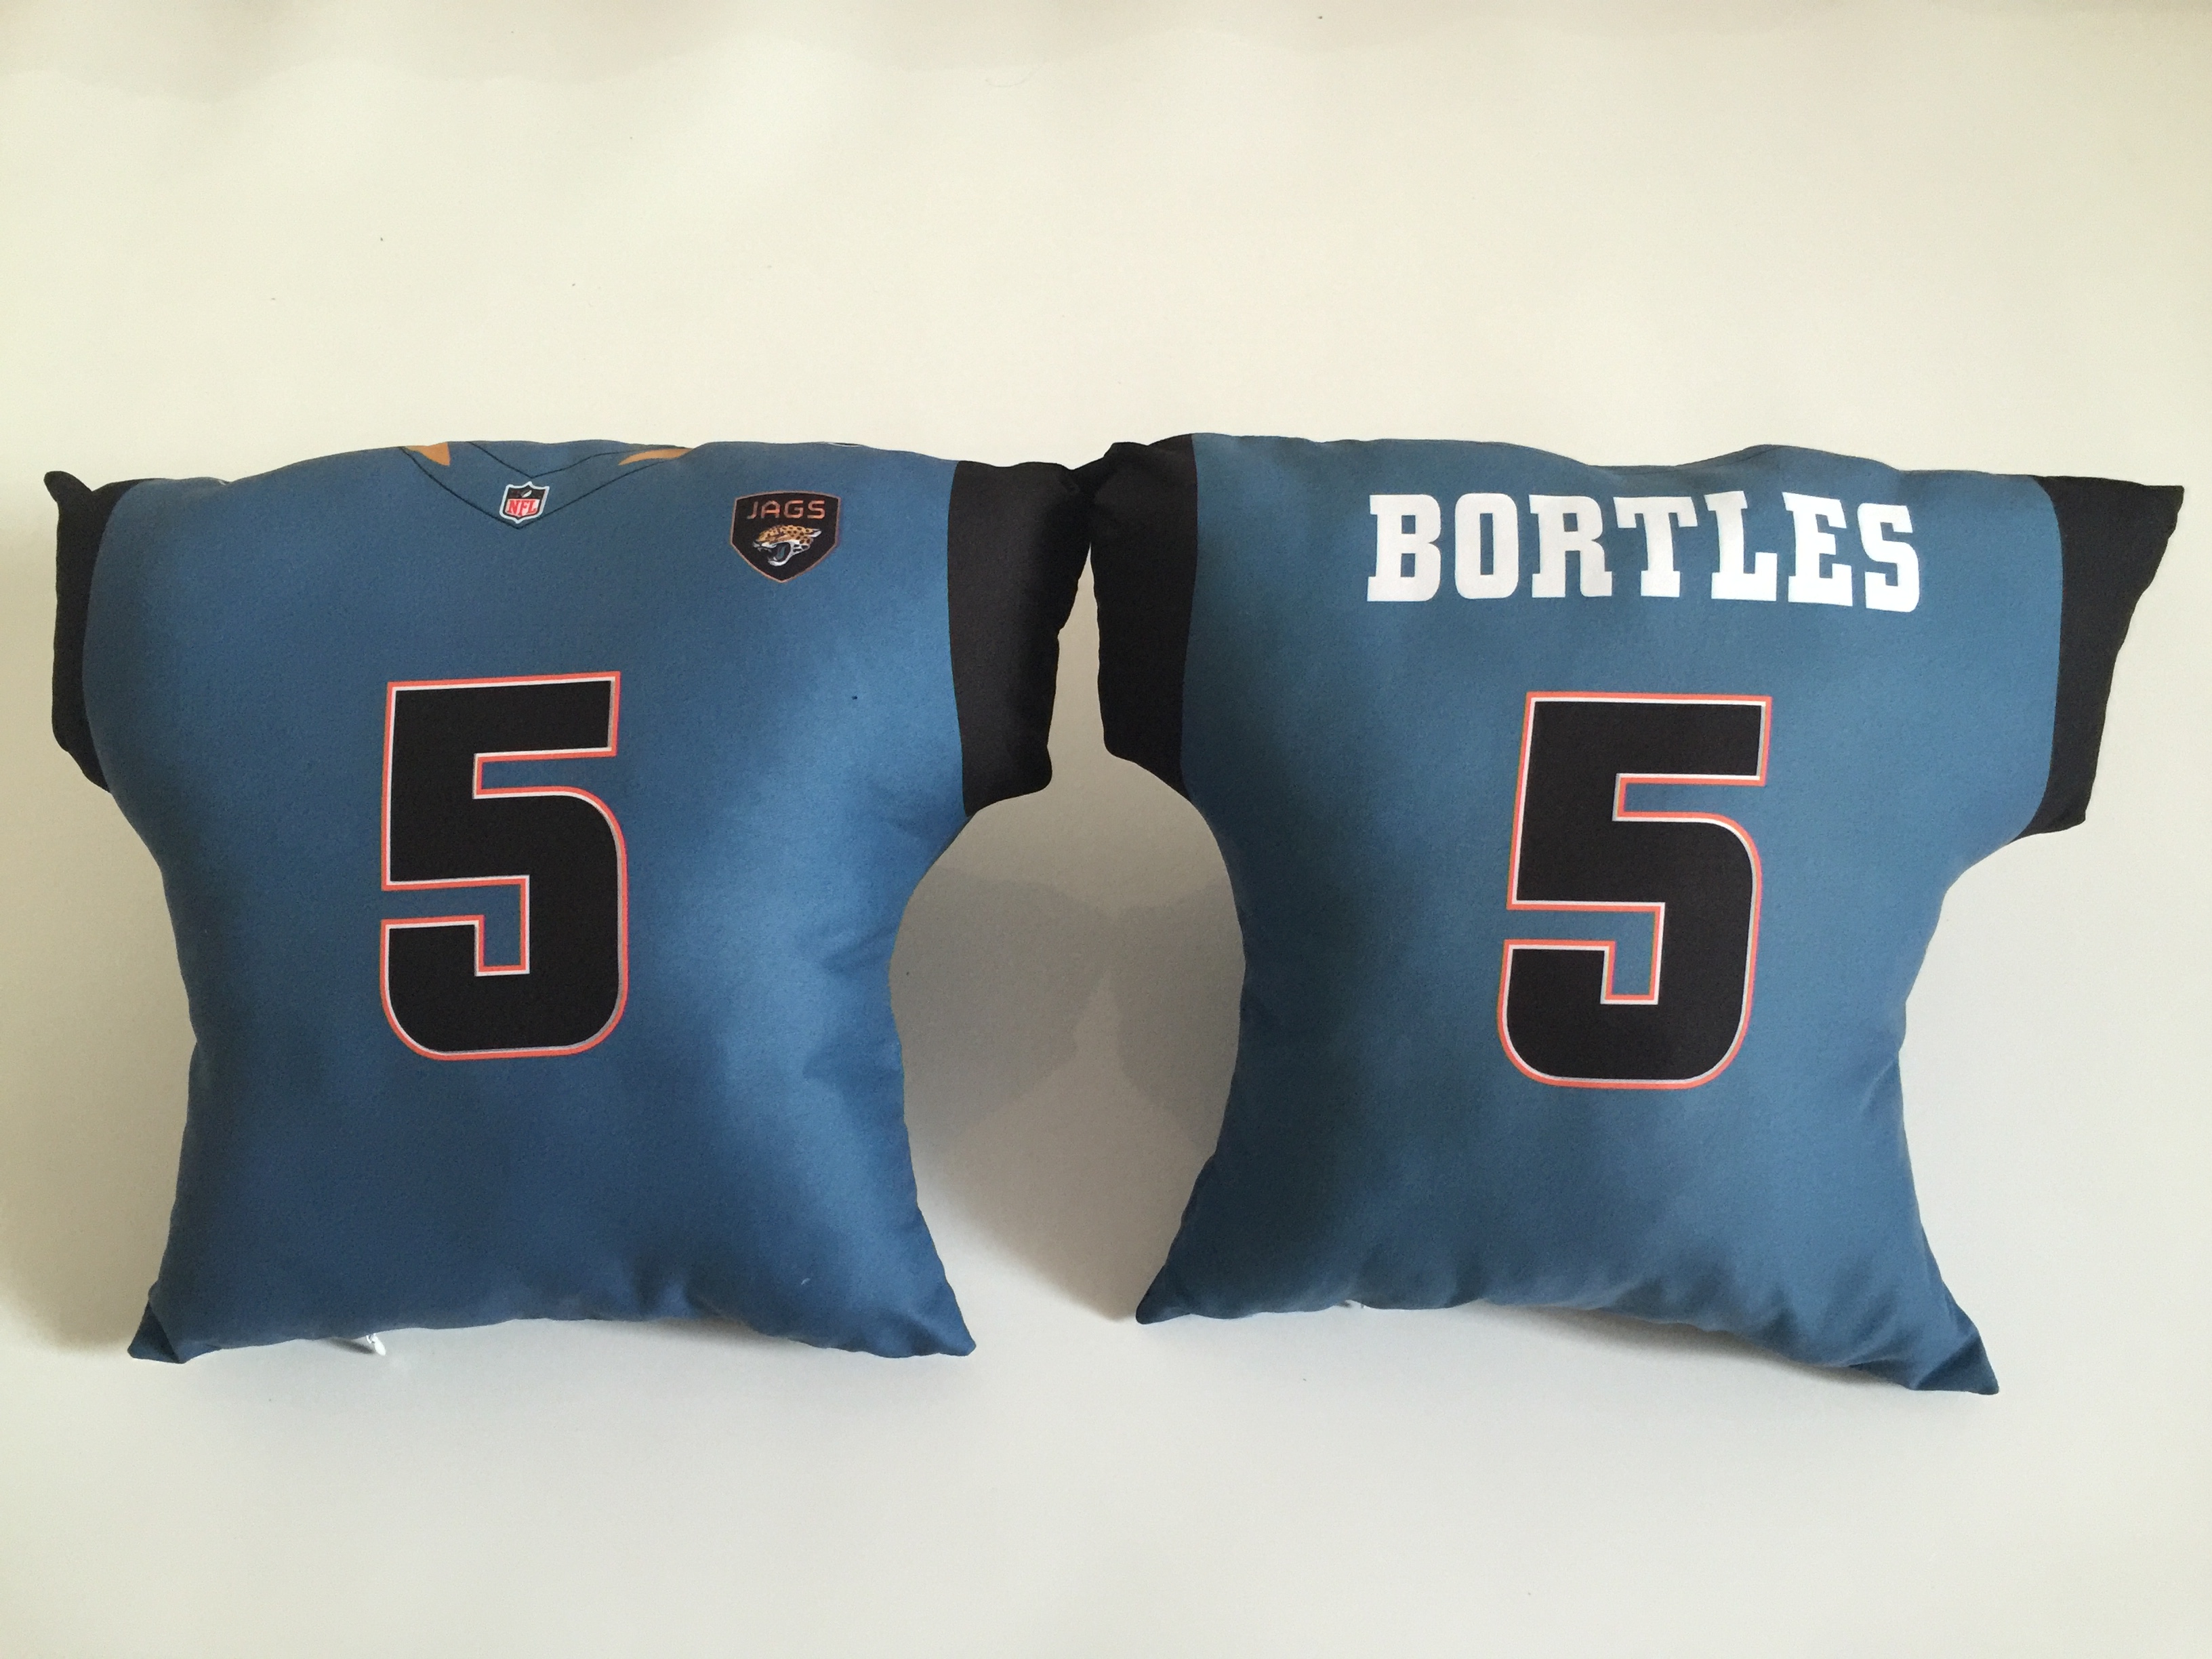 Jacksonville Jaguars 5 Blake Bortles NFL Pillow - Click Image to Close